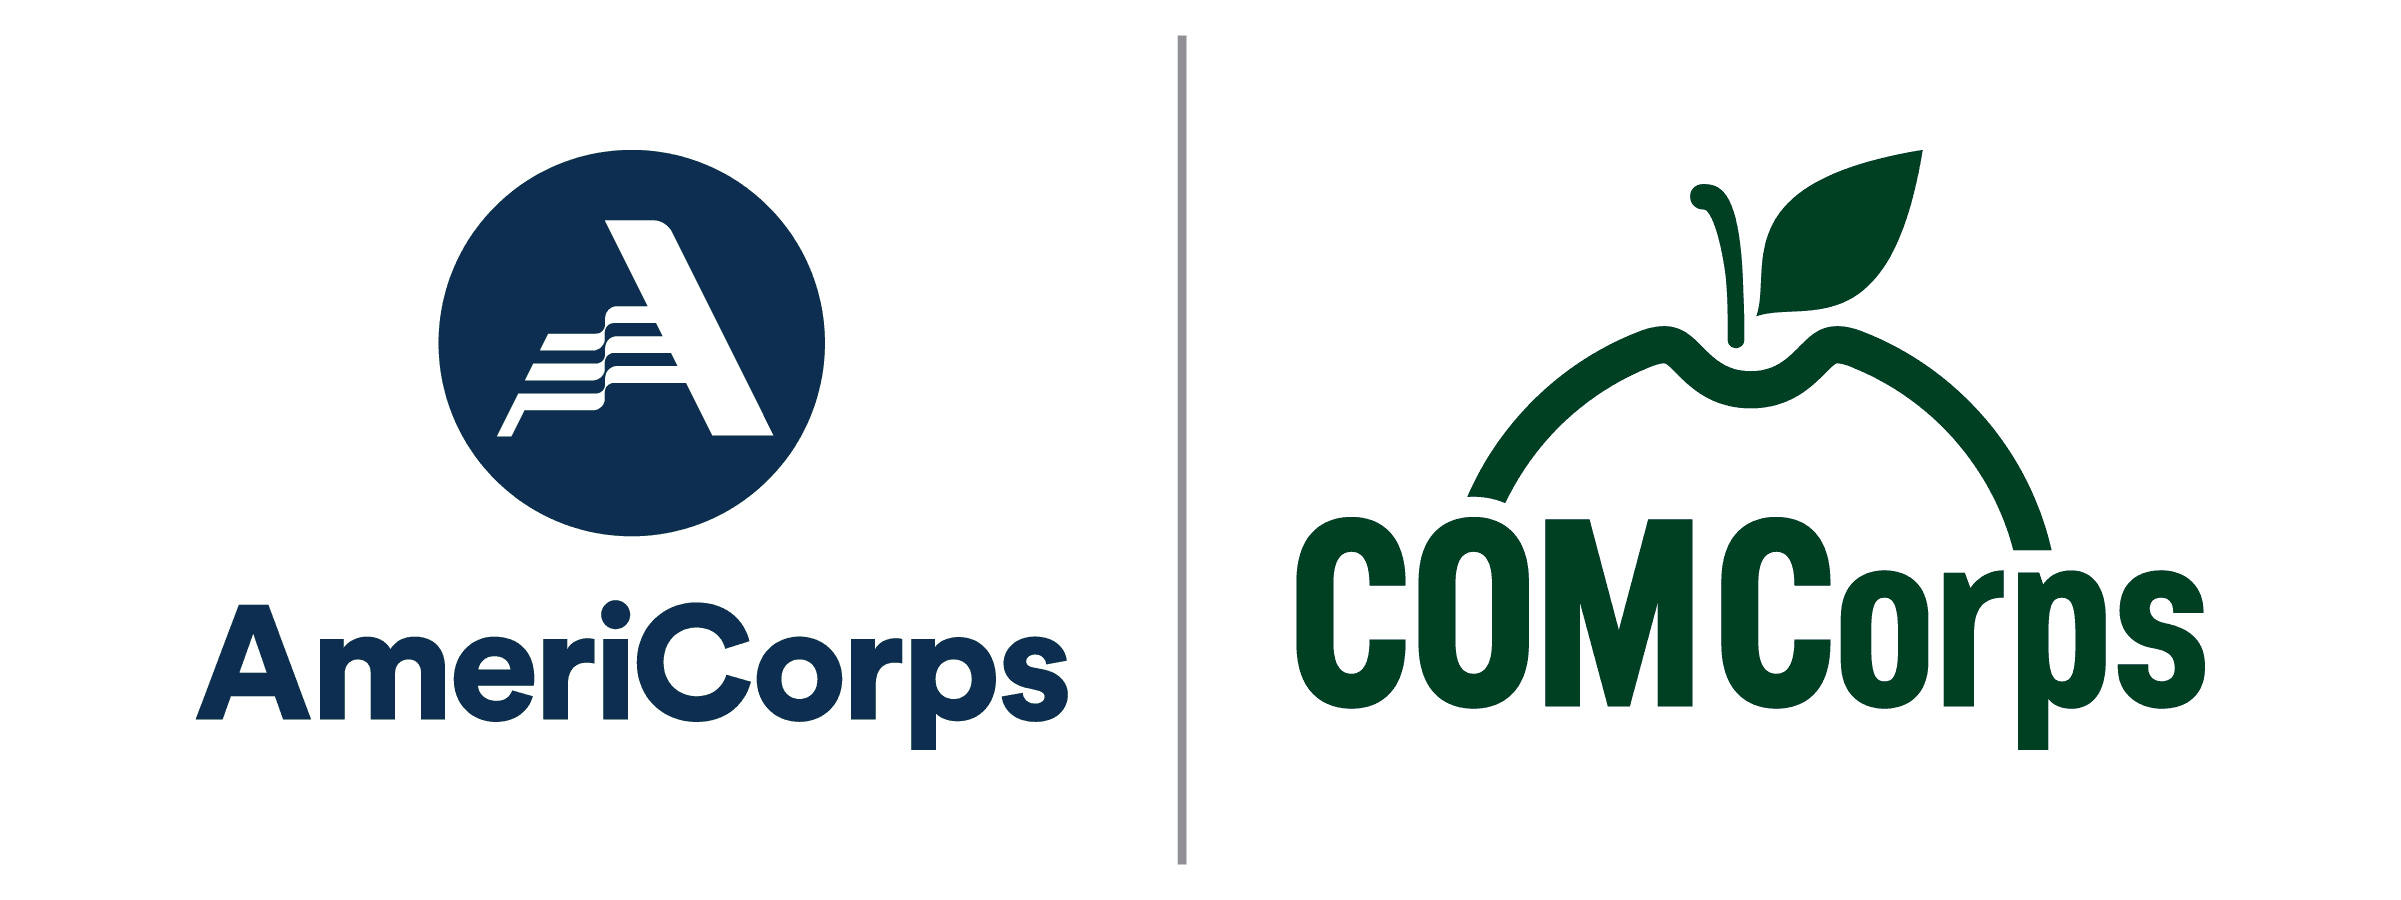 AmeriCorps COMCorps